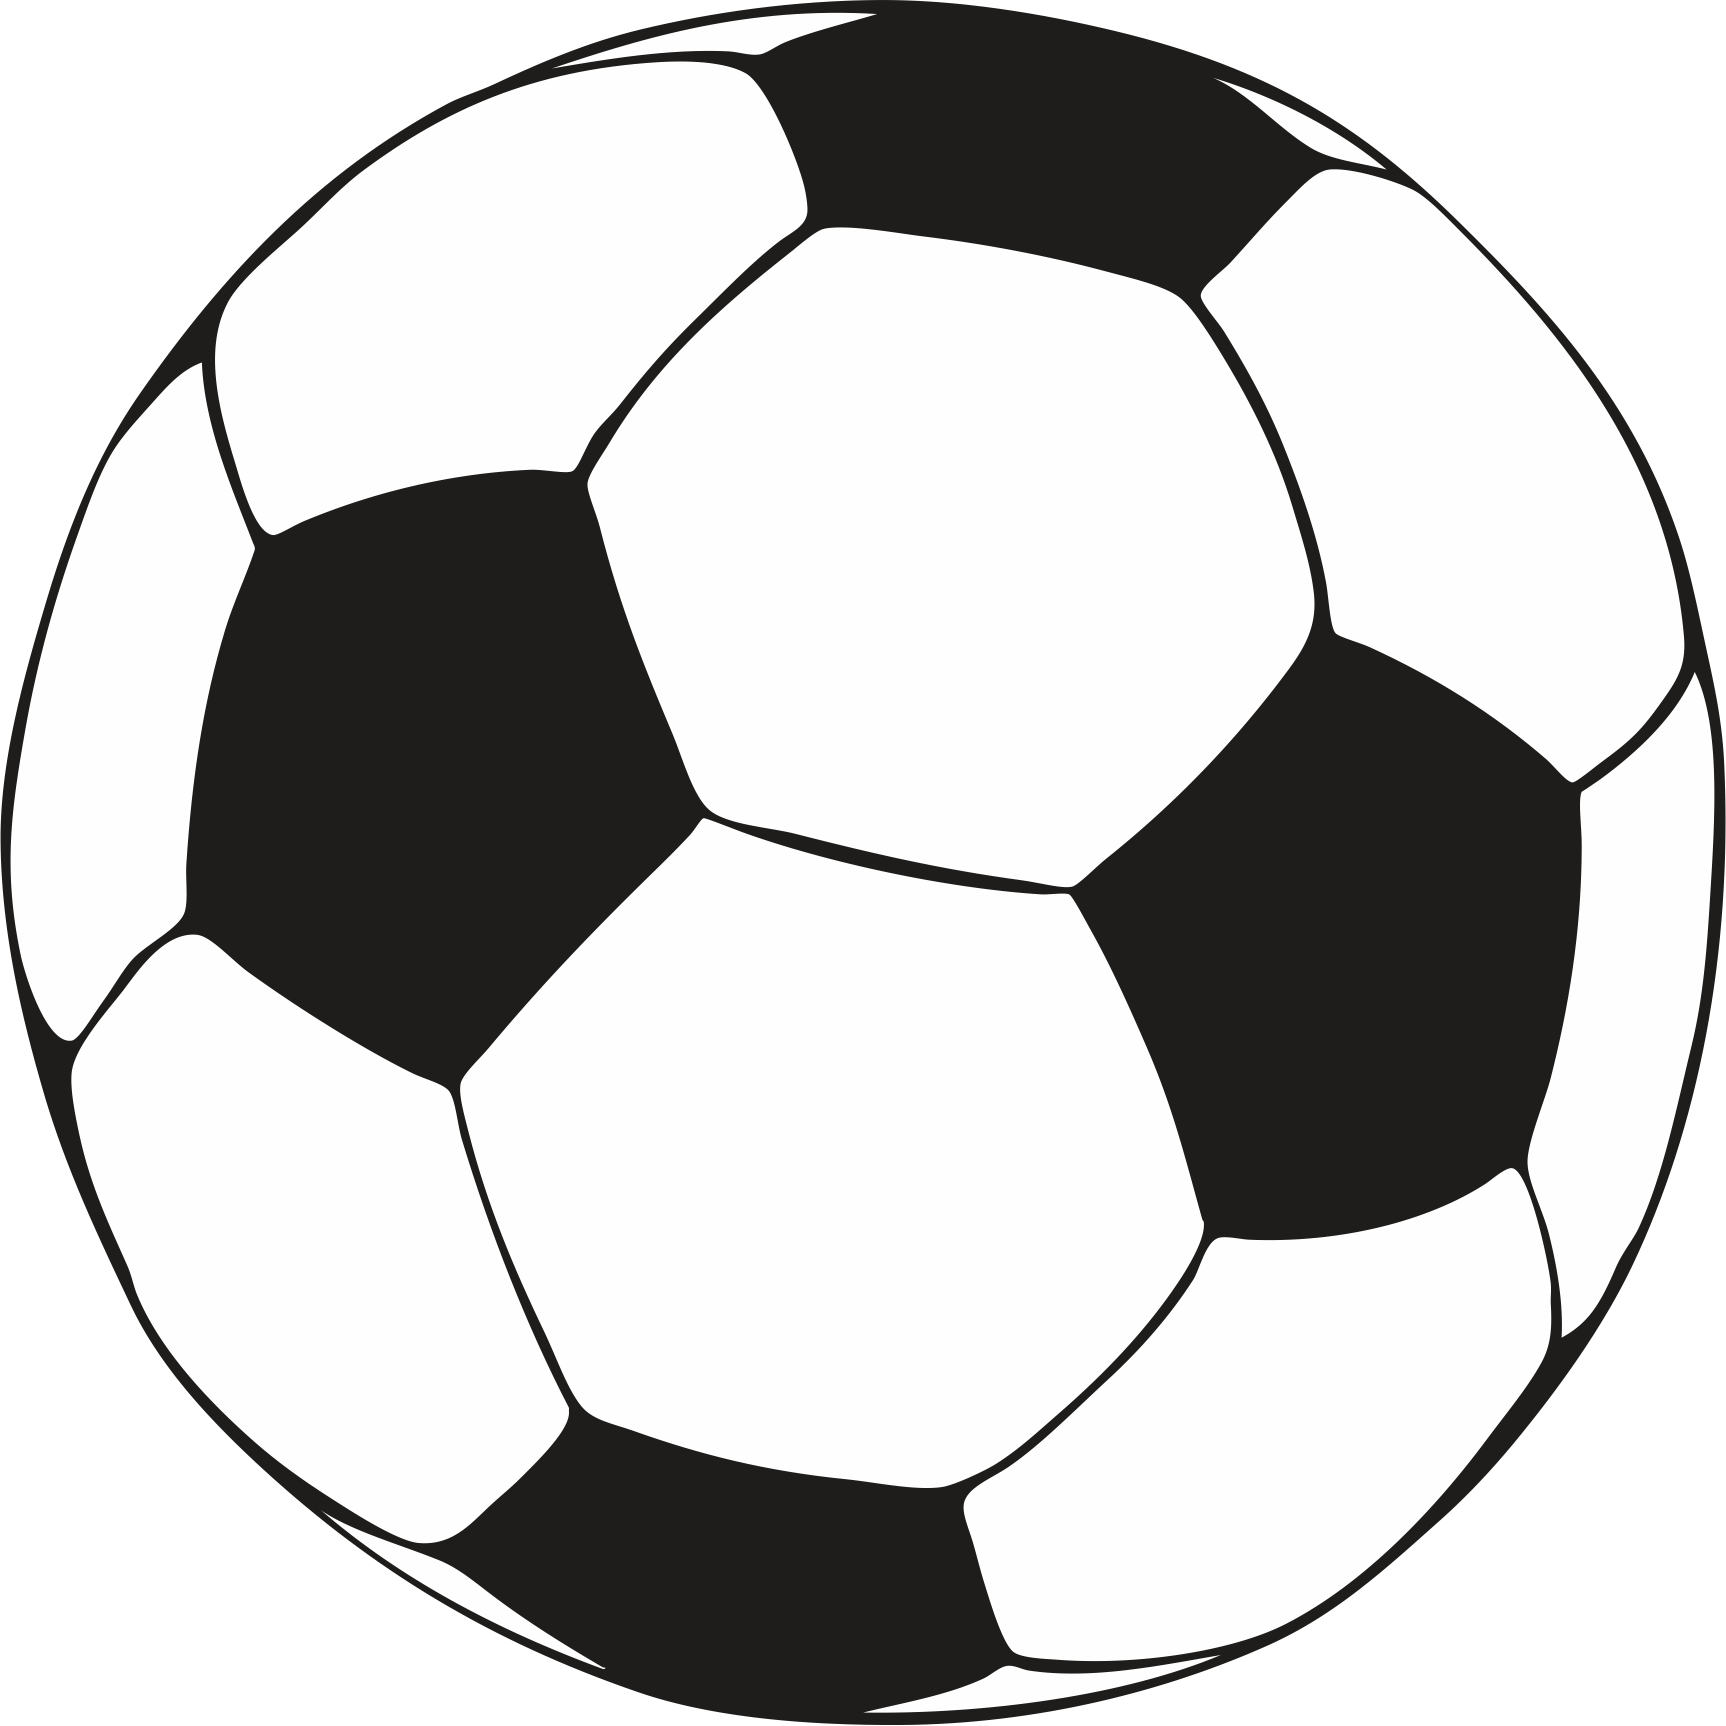 Soccer ball soccer clipart image football player kicking a 2 ...